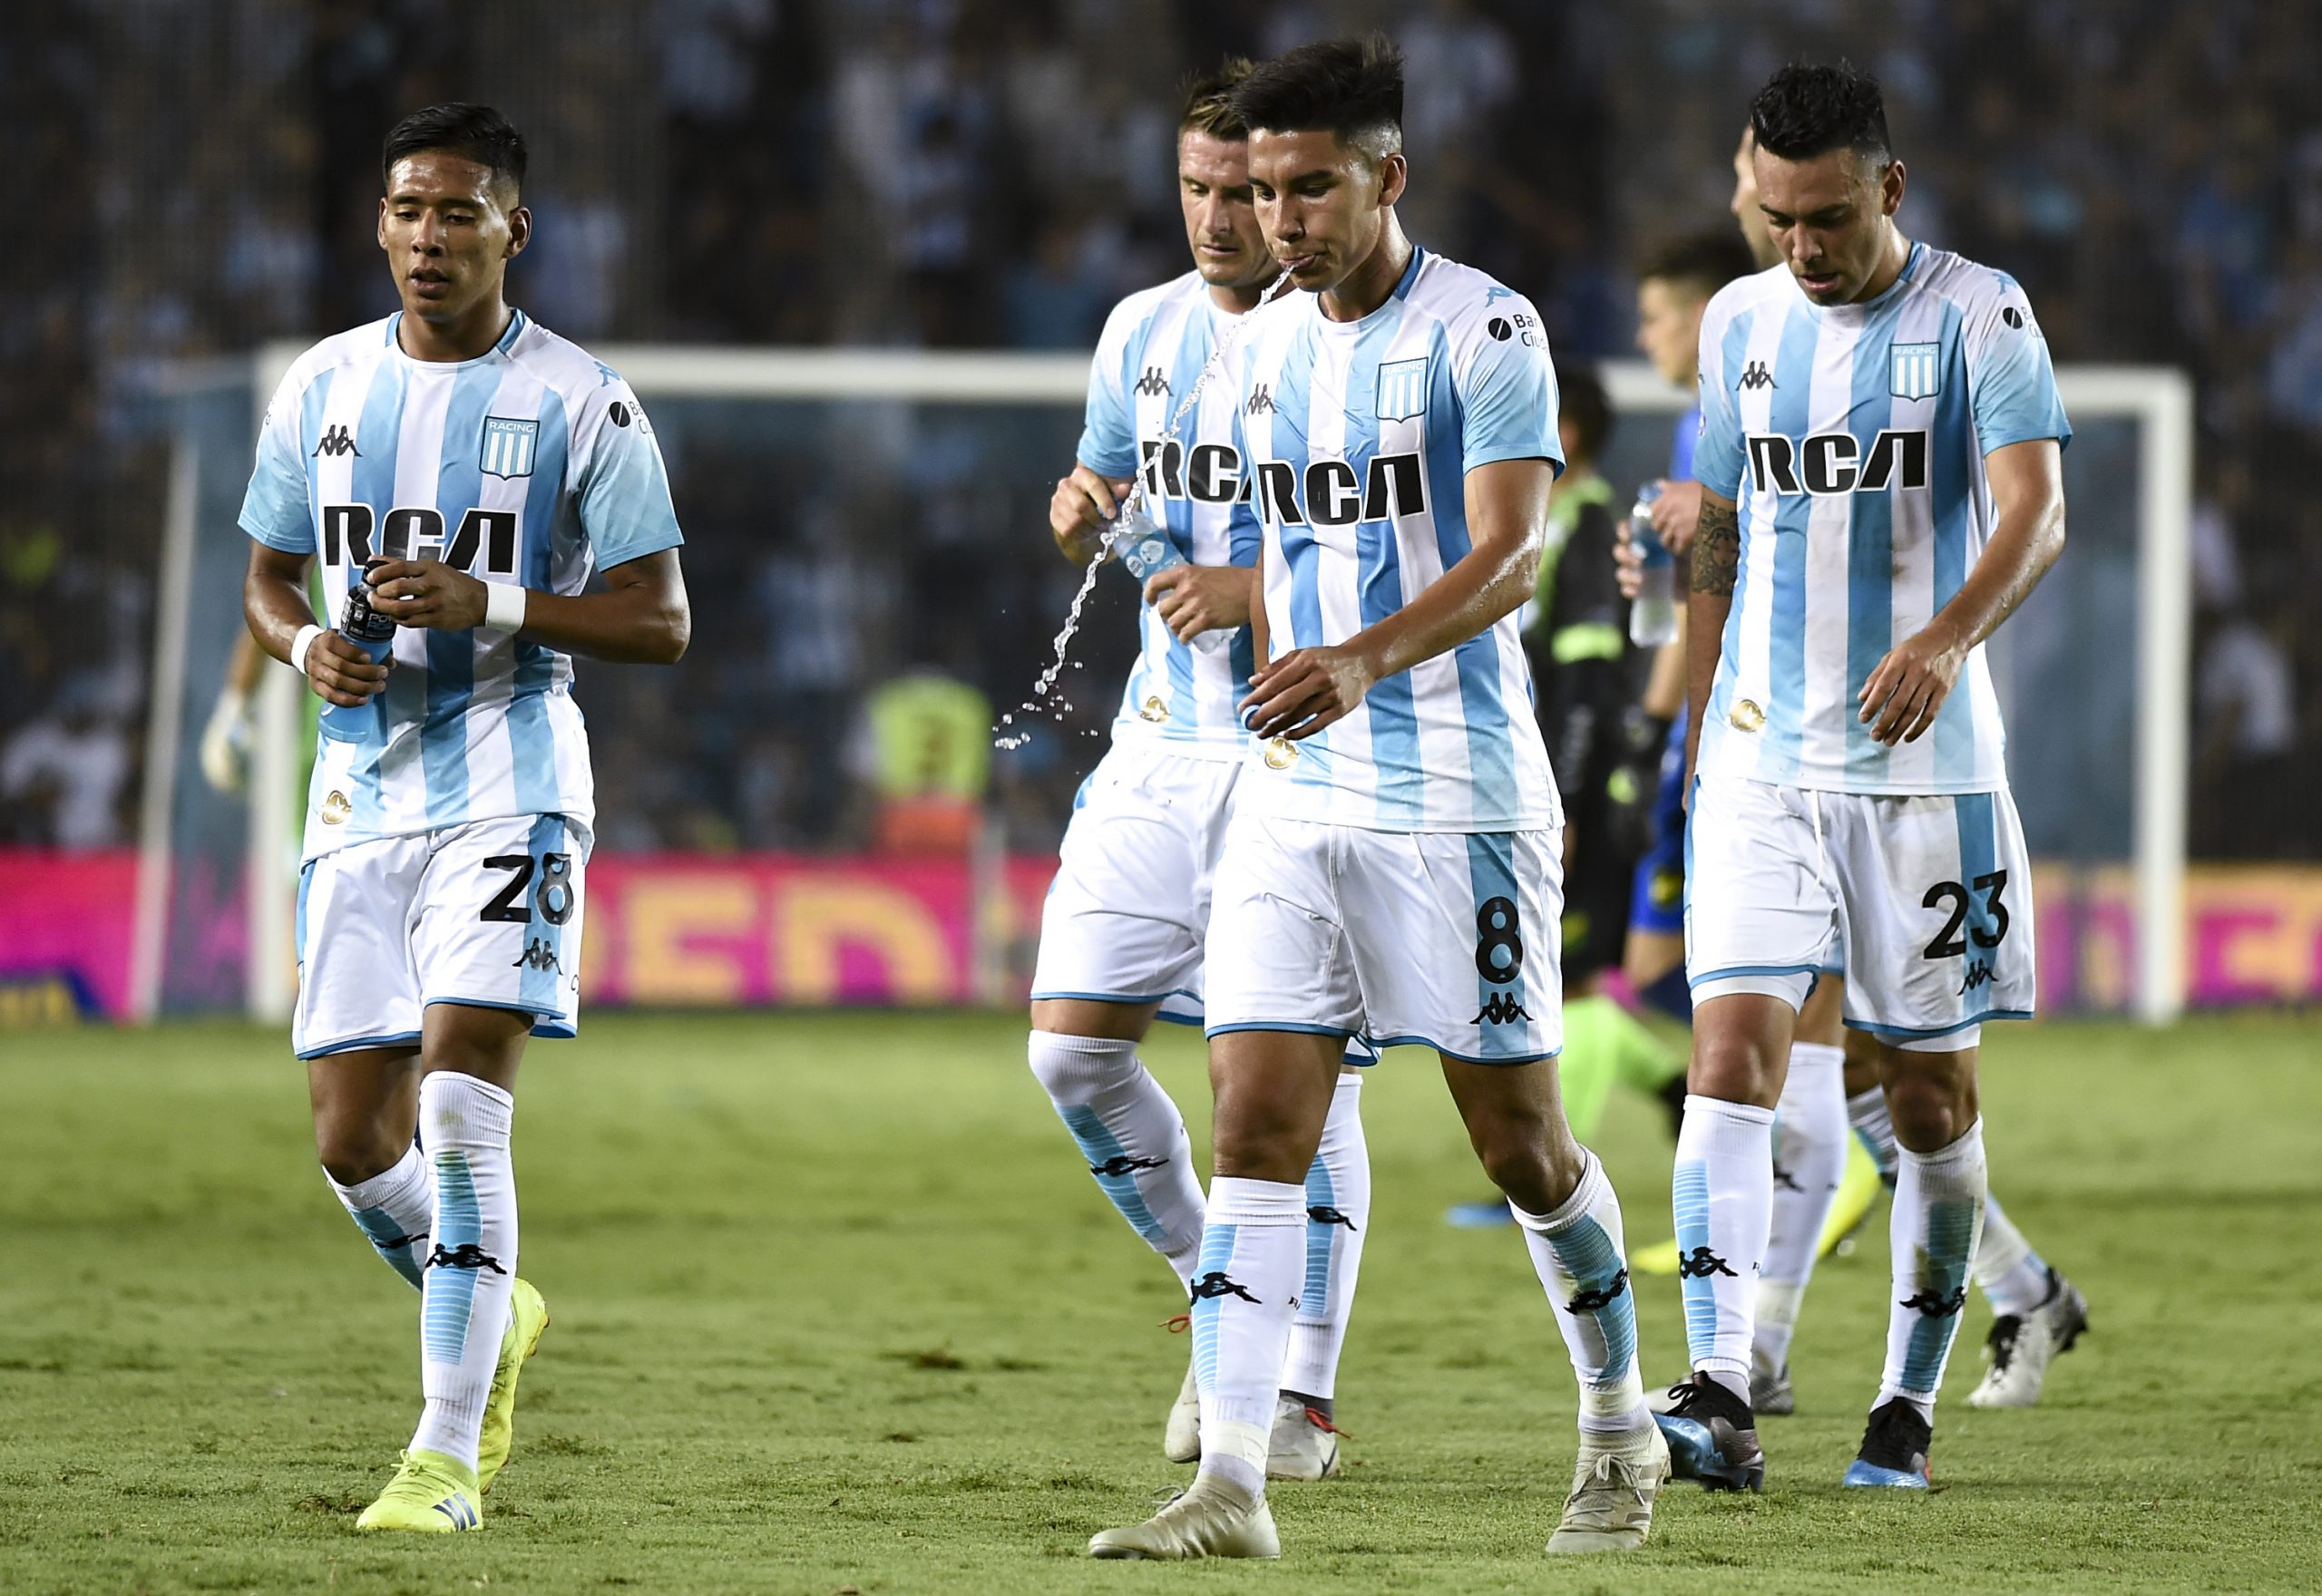 Nery Domínguez nuevo refuerzo de la U: “Vengo a sumar” | Fútbol Chileno